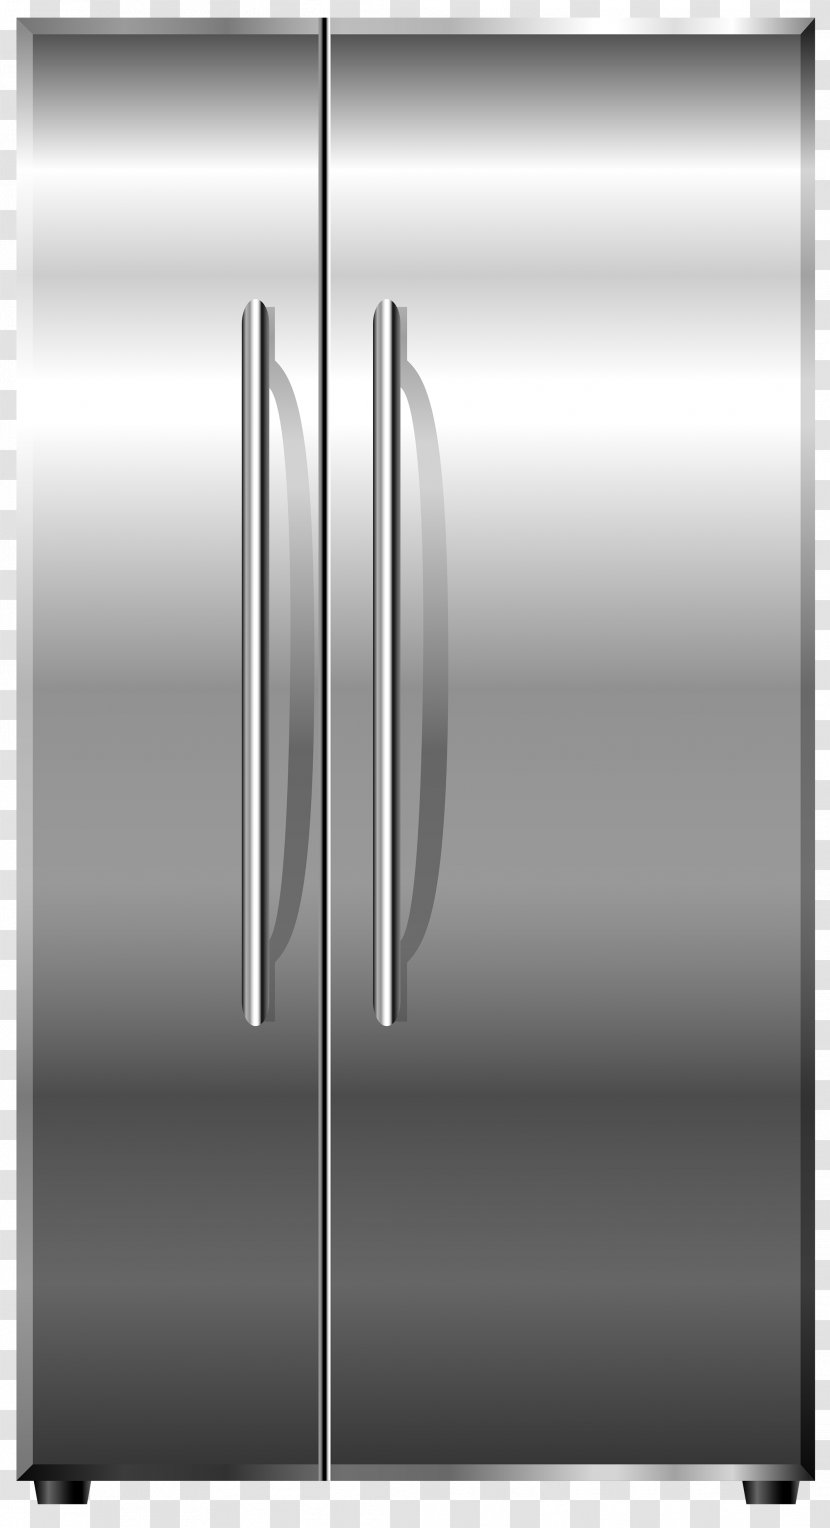 Home Appliance Freezers Clip Art - Photography - Freezer Transparent PNG